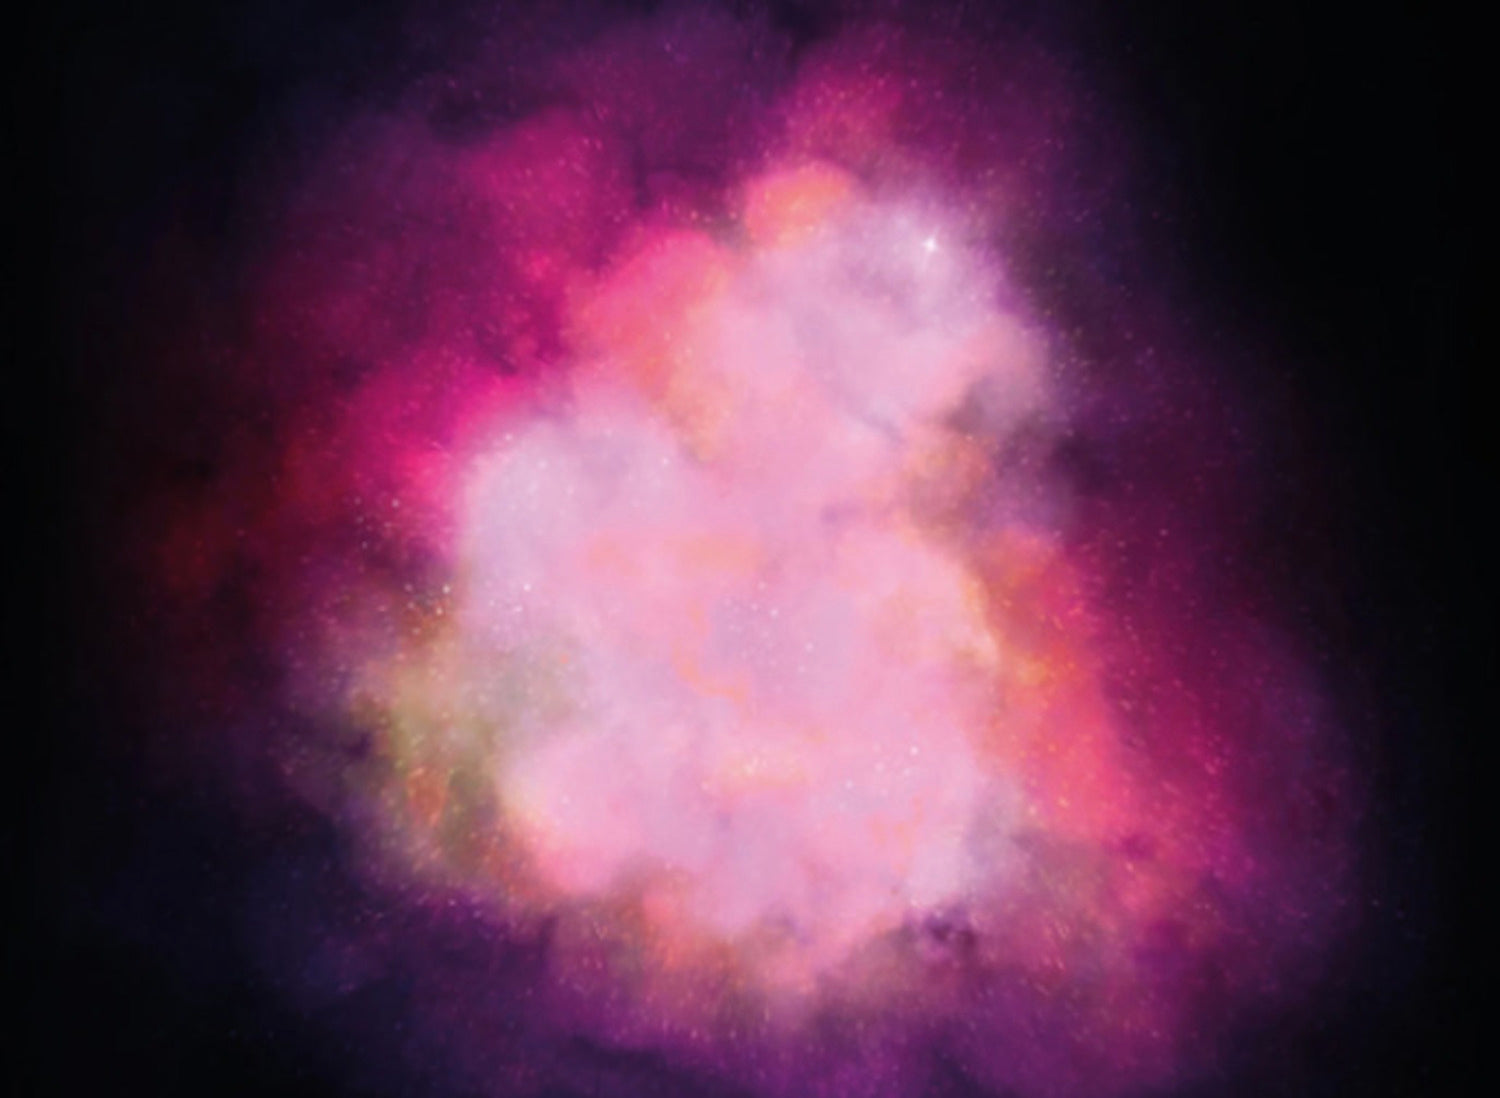 Galaxy Explosion (Diamond Dust - Pink)